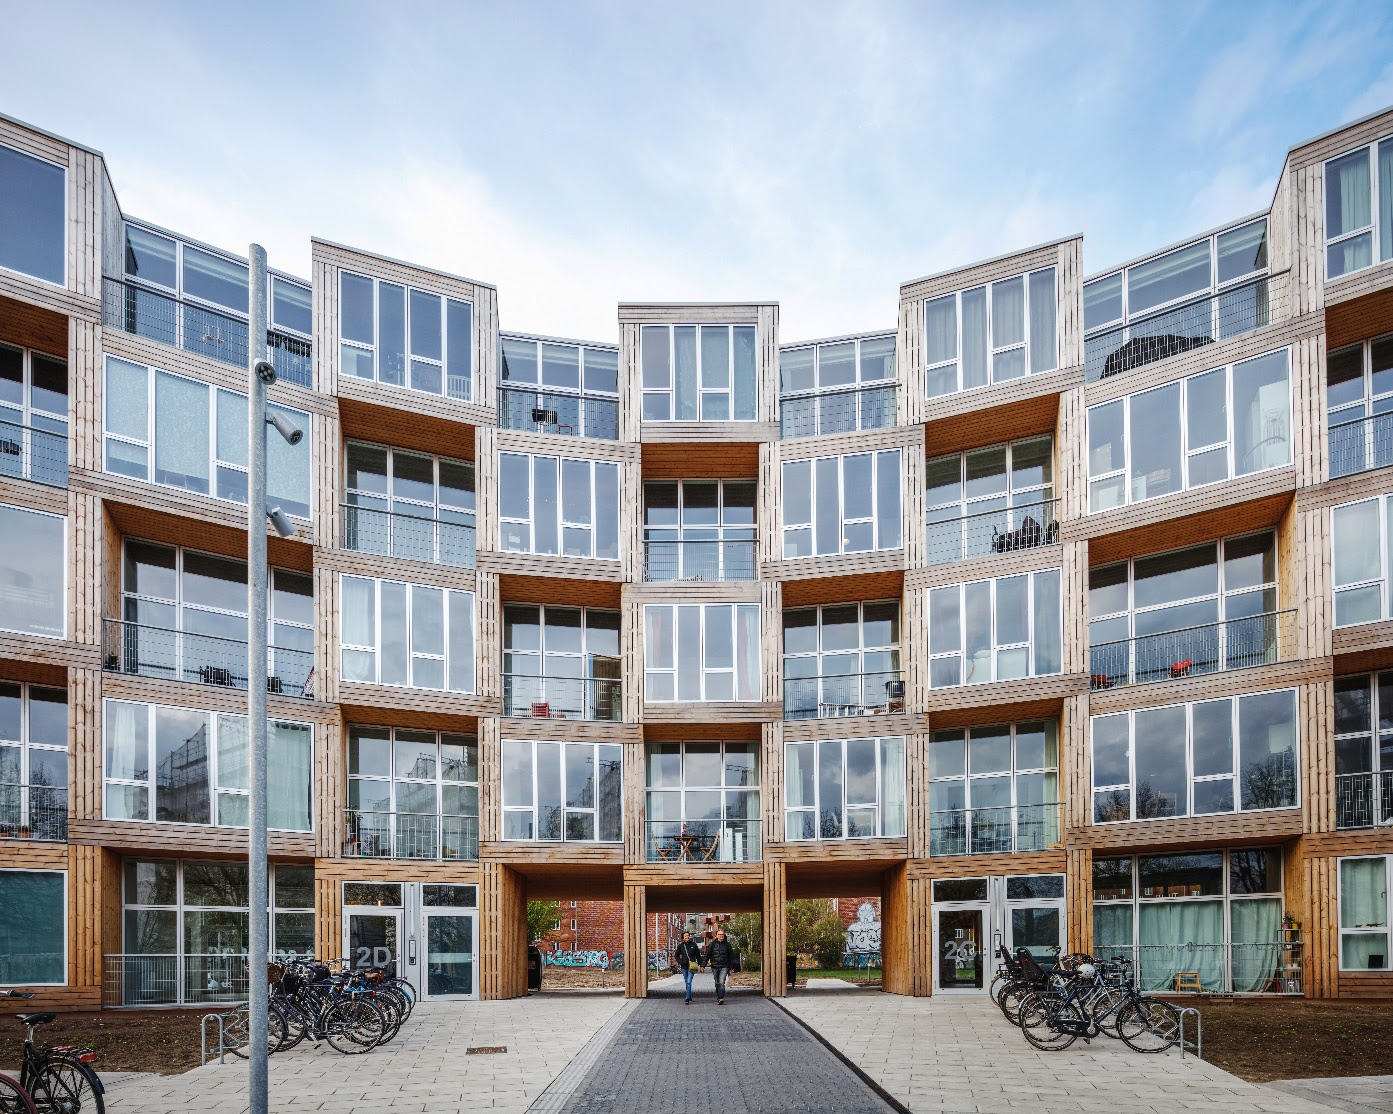 Dortheavej affordable housing complex in Copenhagen designed by Bjarke Ingels Group (BIG)